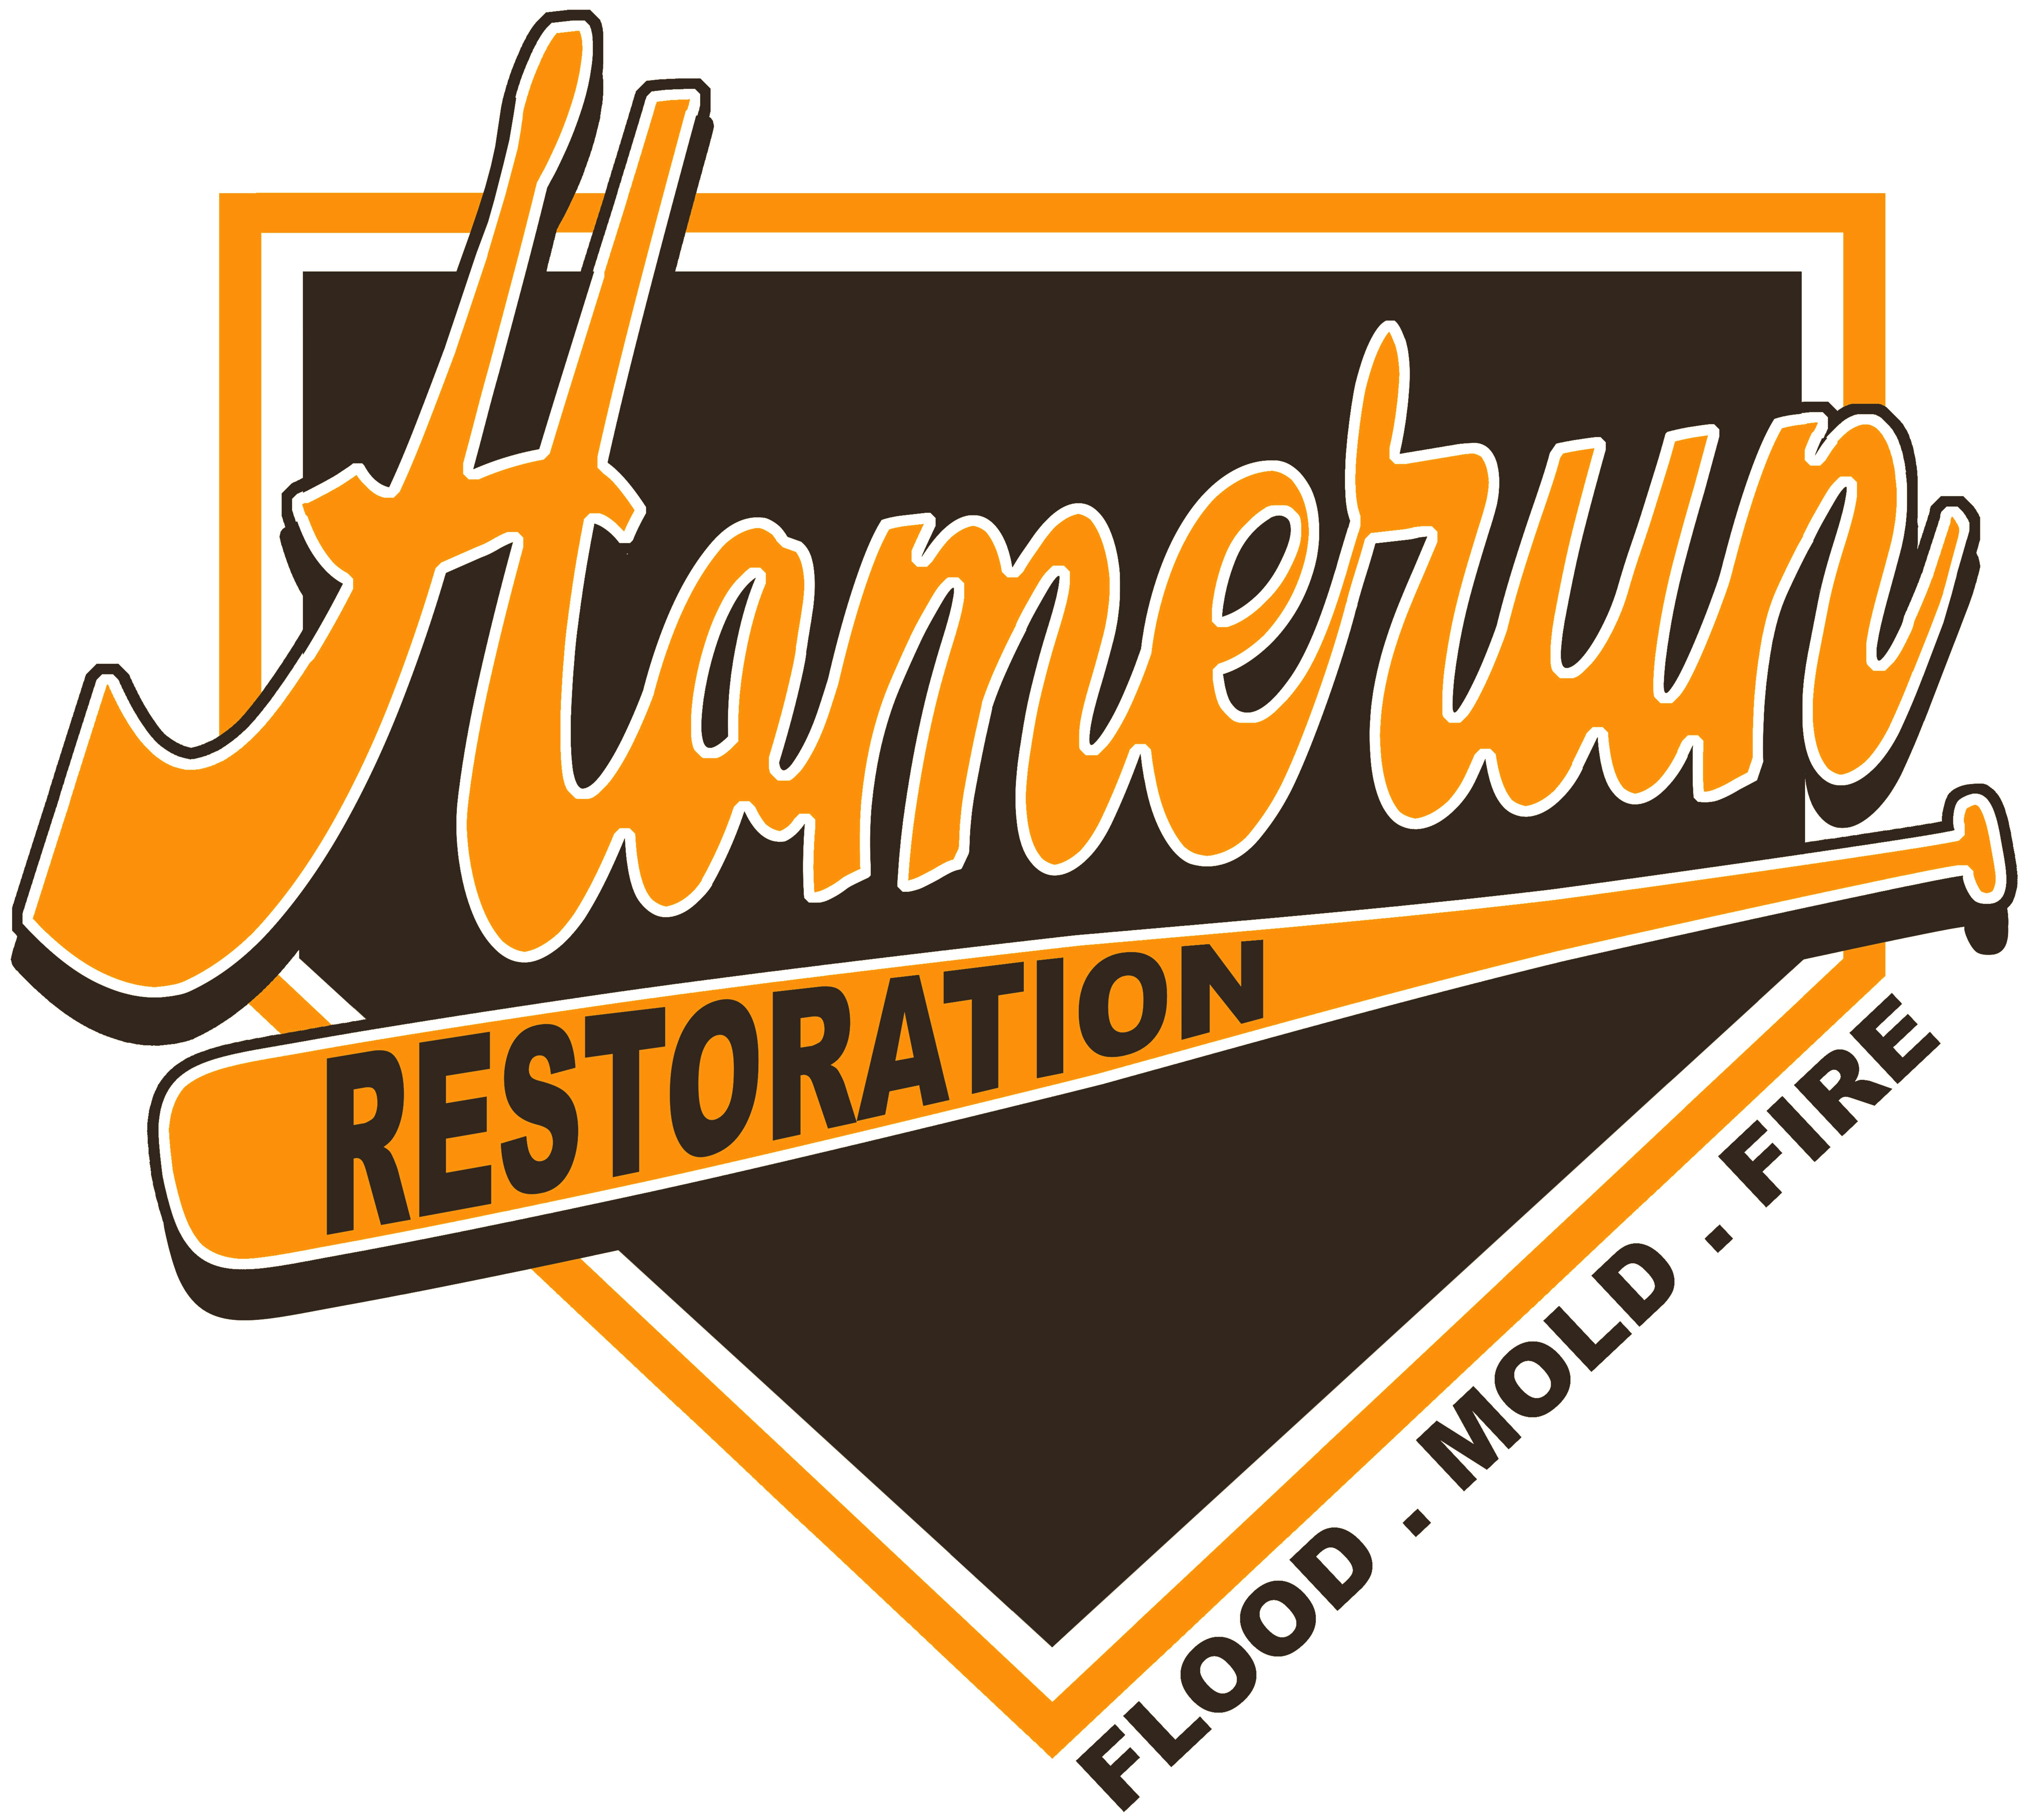 Homerun Restoration, LLC Logo